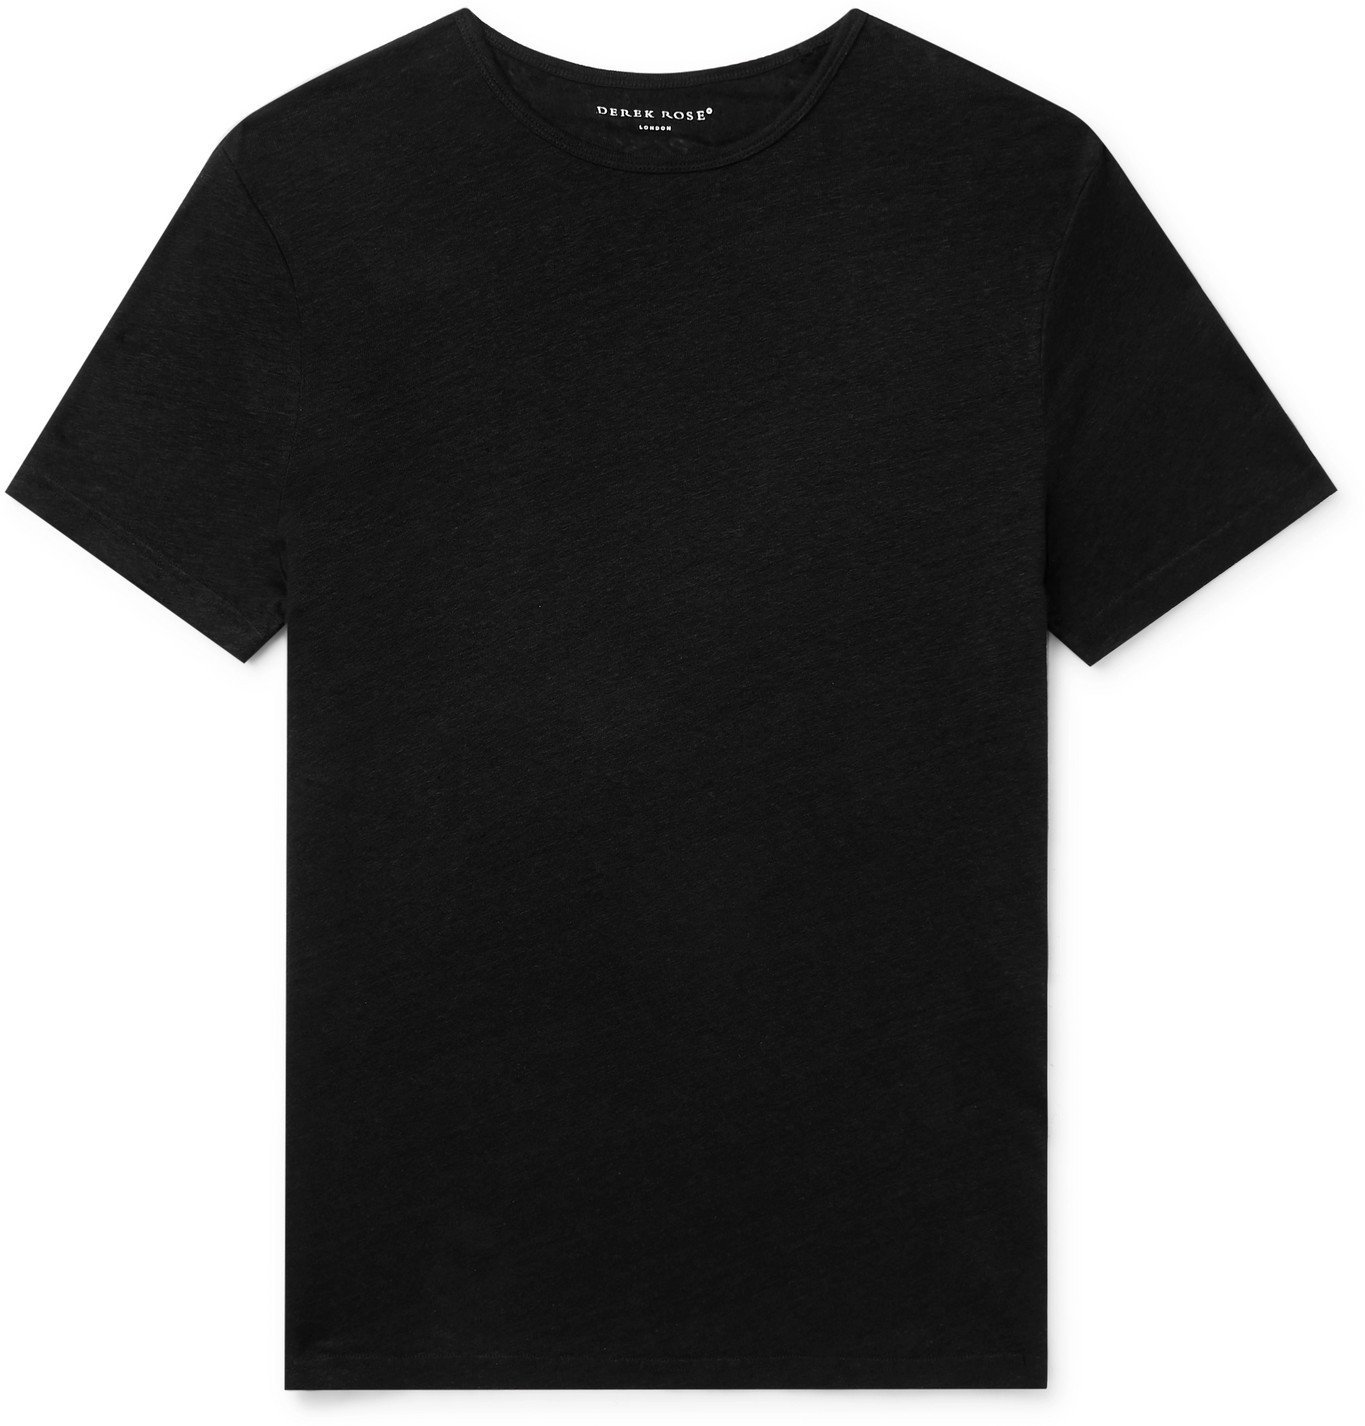 DEREK ROSE - Jordan 1 Washed-Linen T-Shirt - Black Derek Rose